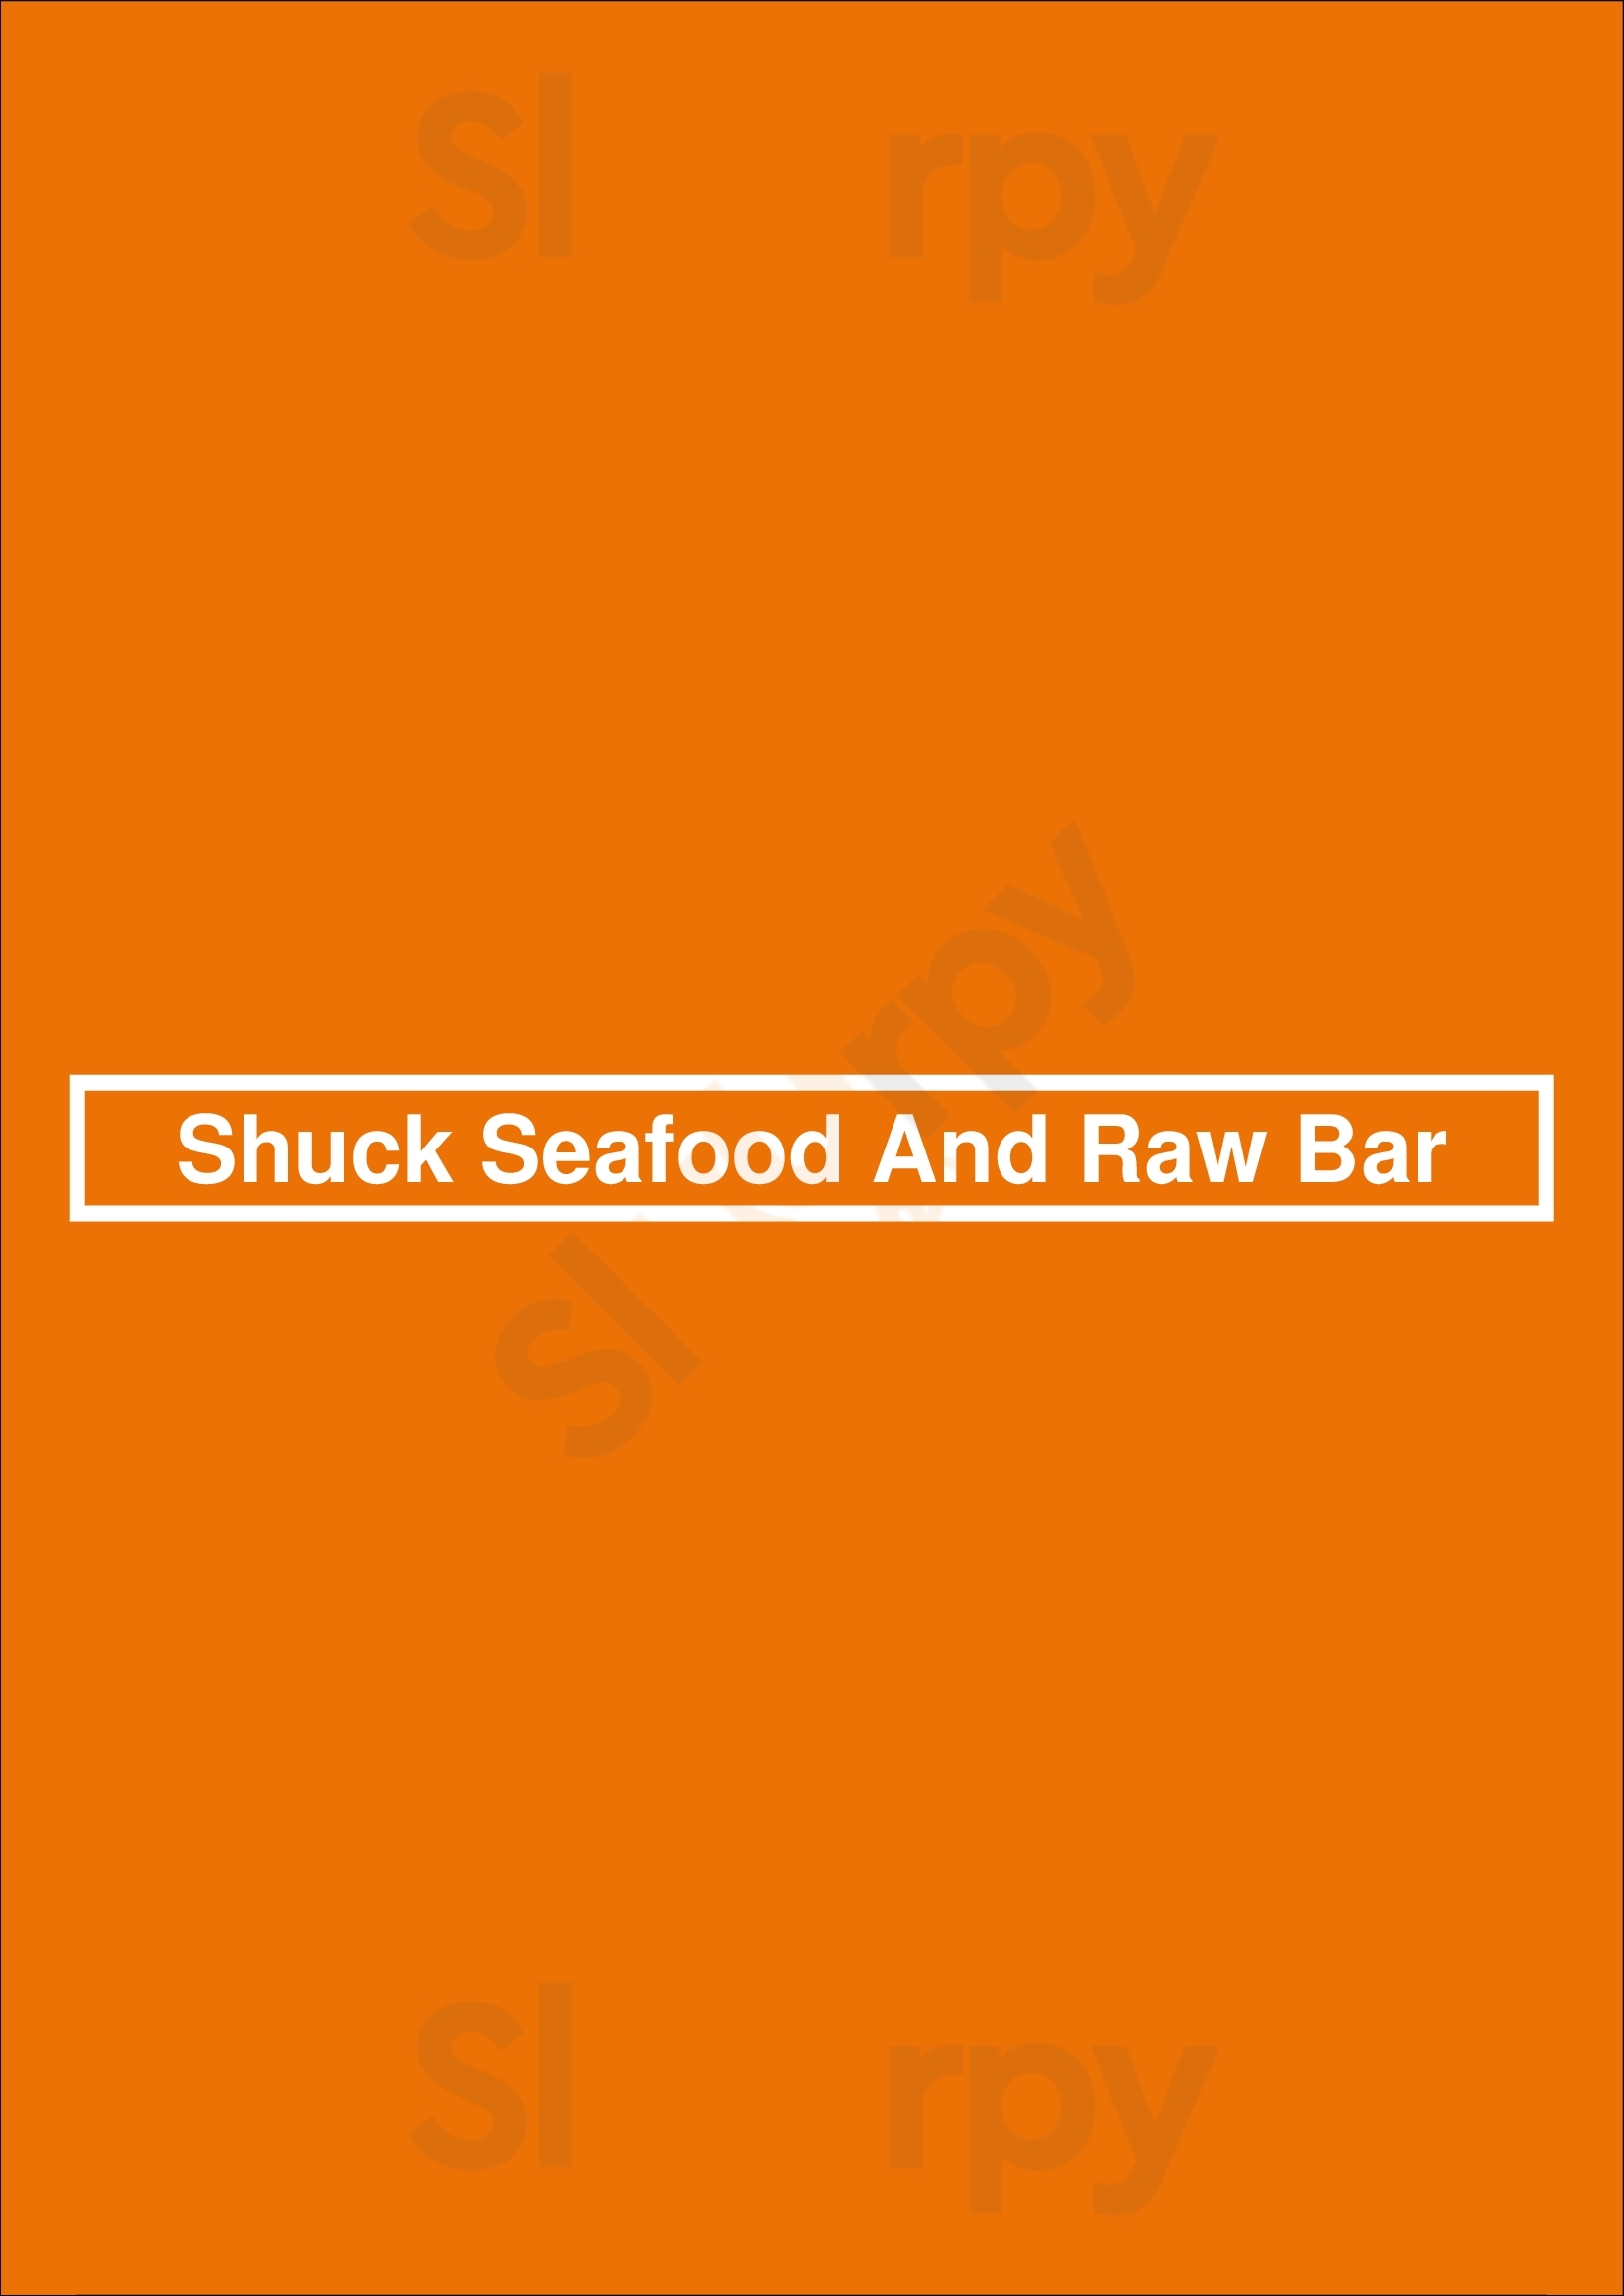 Shuck Seafood And Raw Bar Halifax Menu - 1